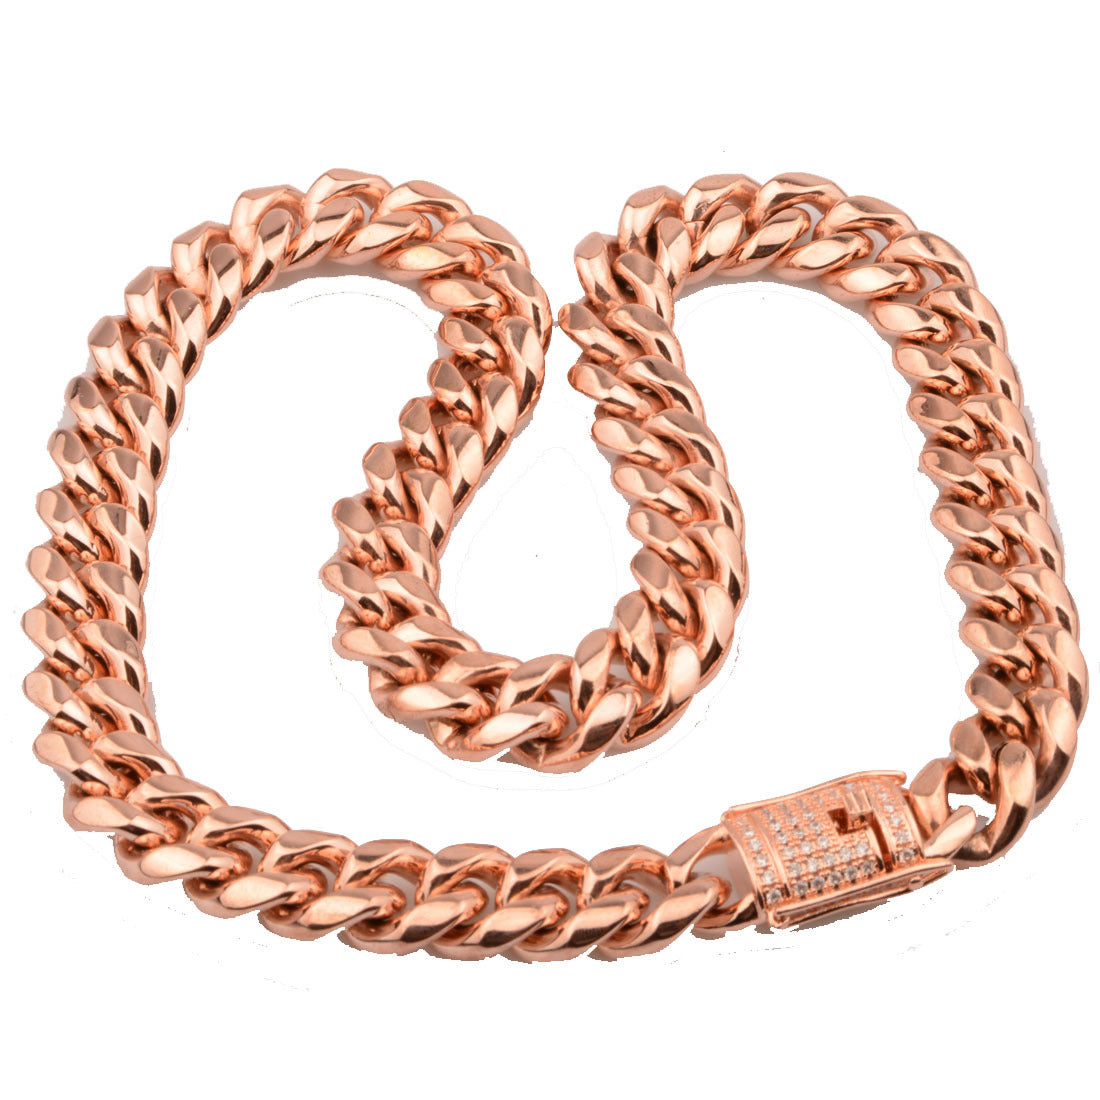 Gold Chain Men Necklace